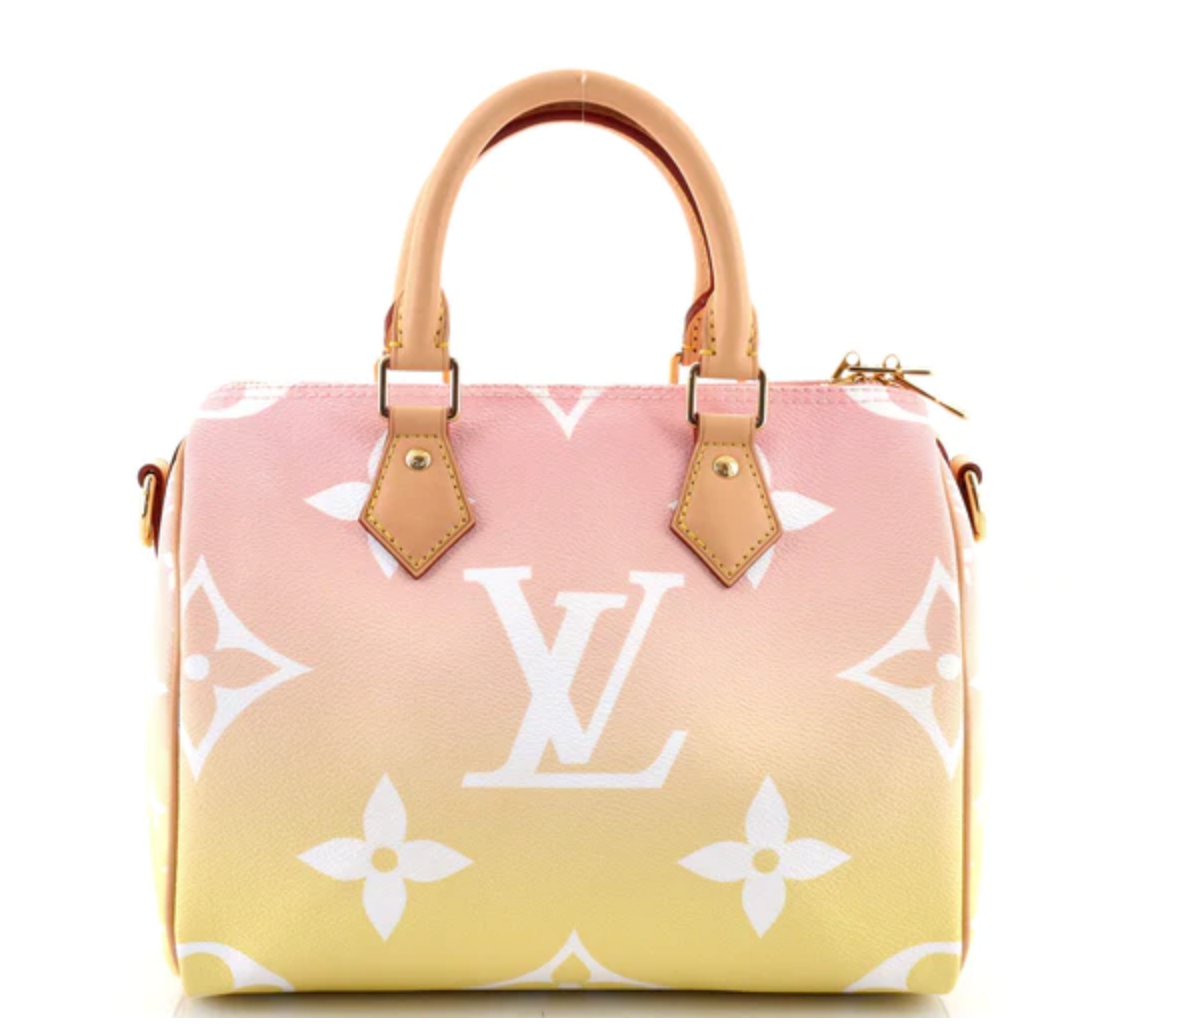 LIKE NEW) Louis Vuitton Giant Monogram Speedy 25 Bandolier Bag By